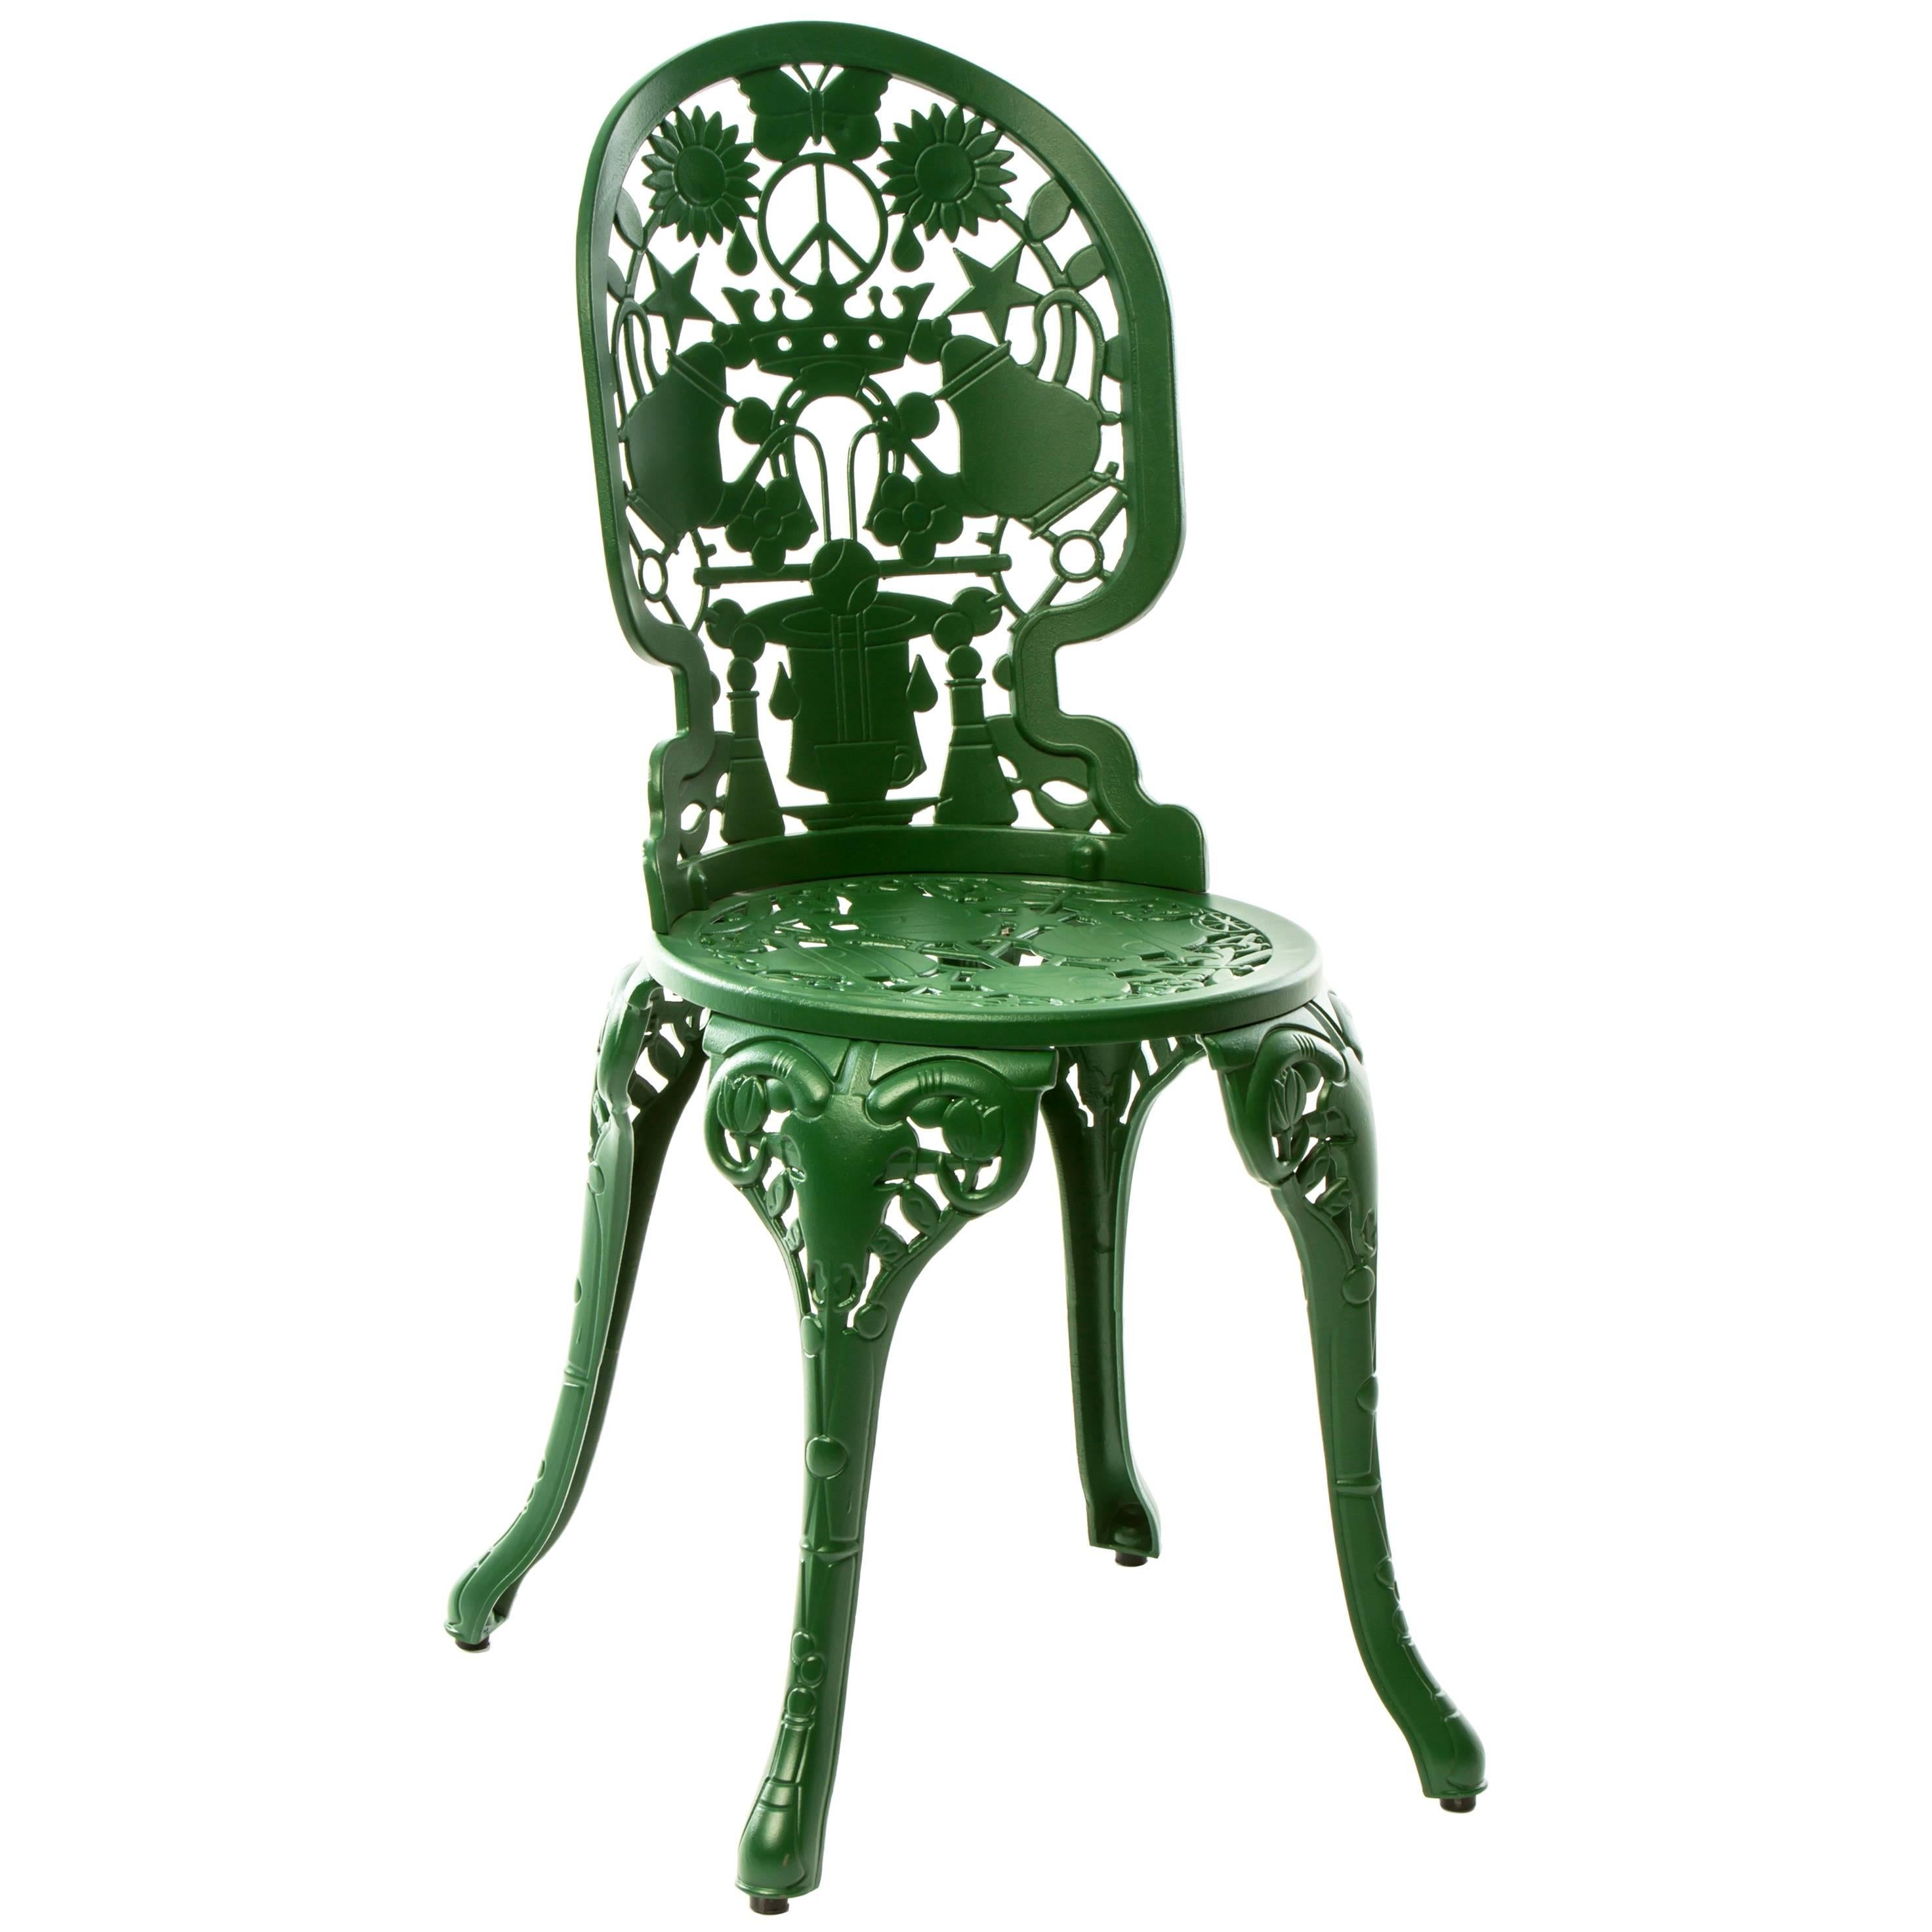 Aluminium Chair "Industry Garden Furniture" by Seletti, Green